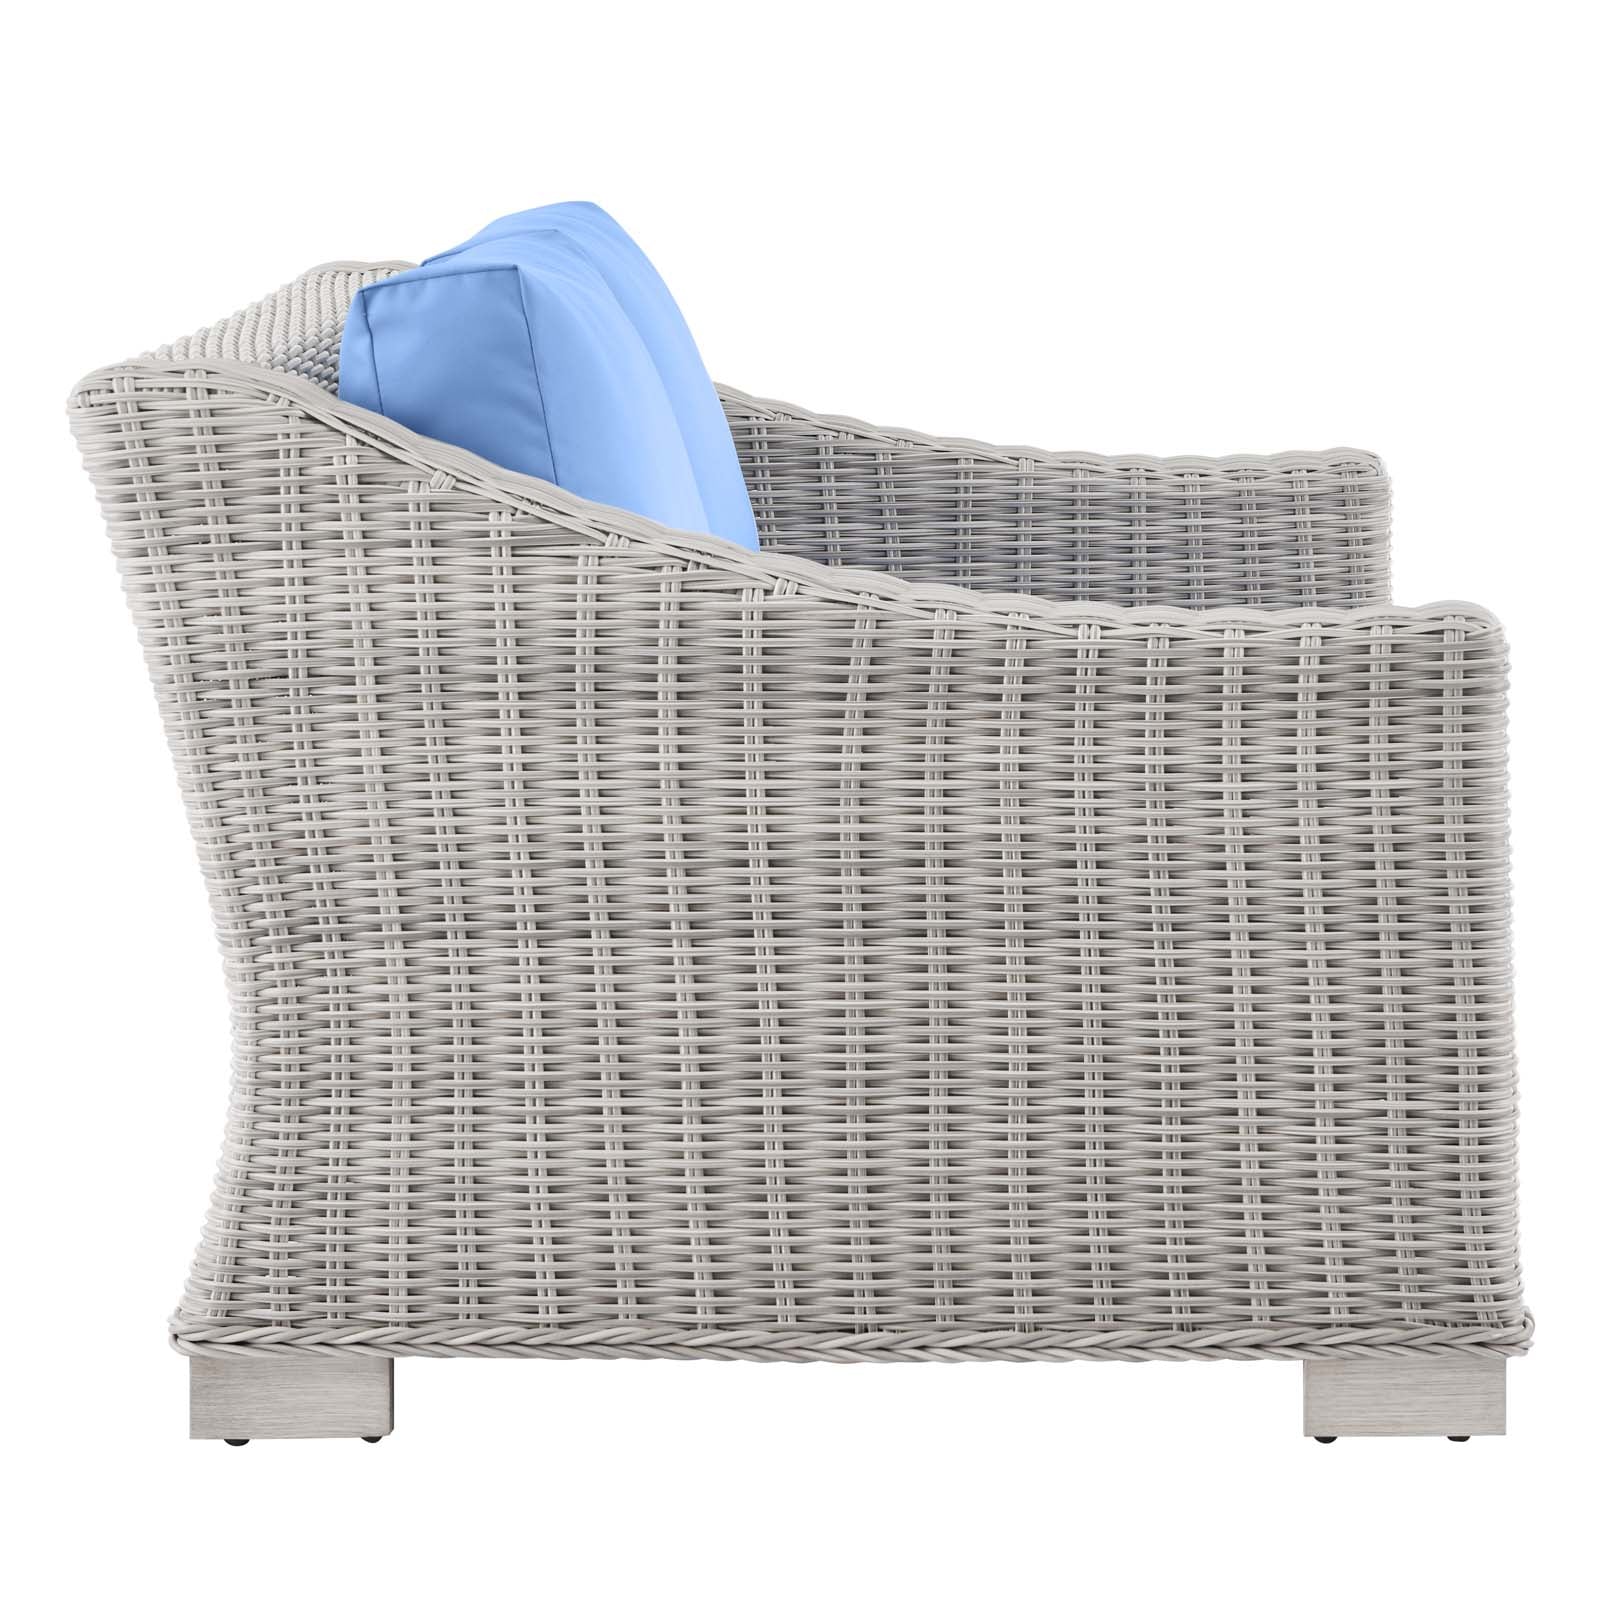 Modway Outdoor Conversation Sets - Conway 4 Piece Outdoor Patio Wicker Rattan Furniture Set Gray 150"